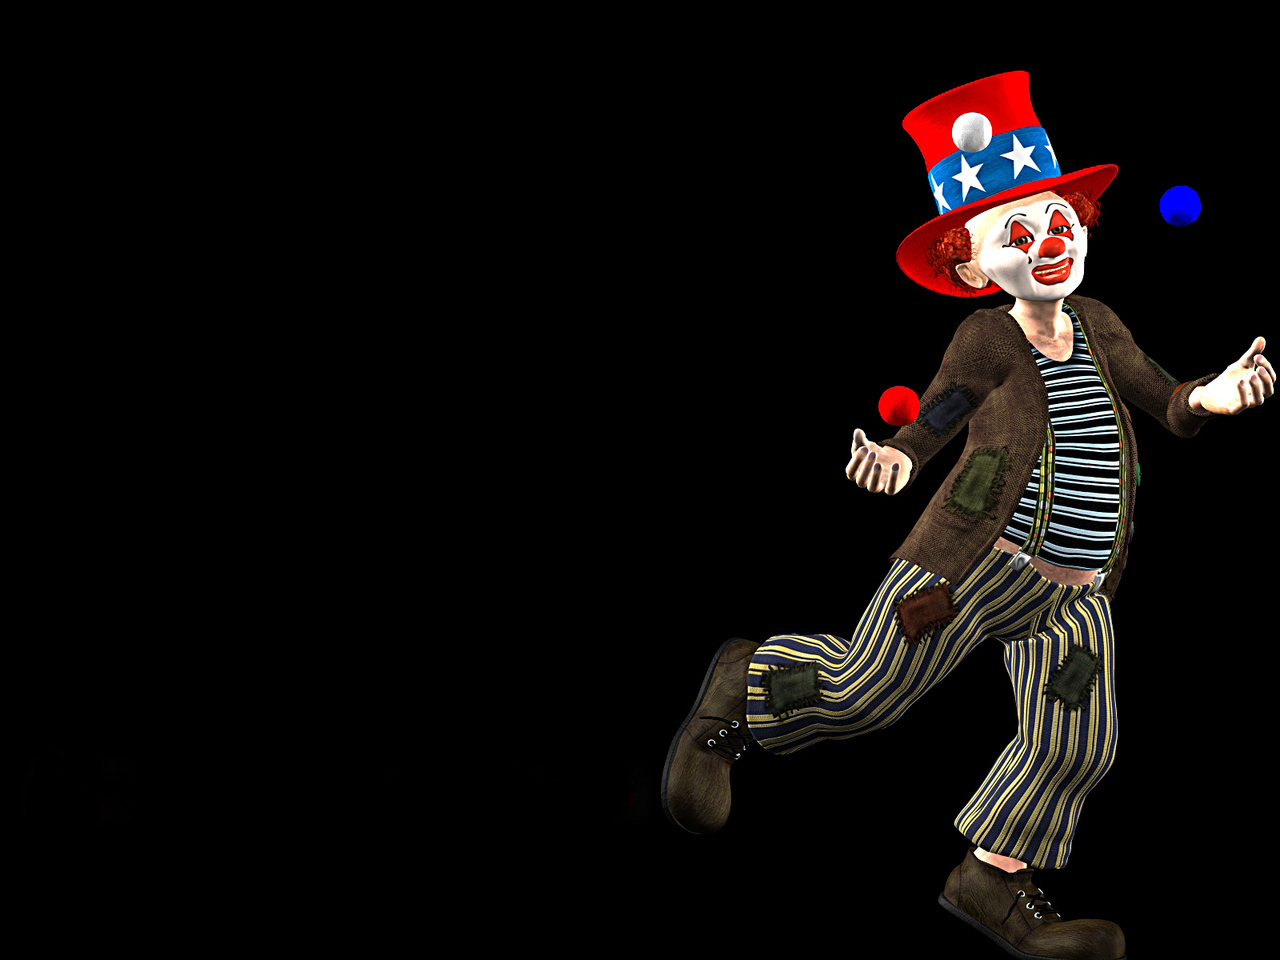 Circus Clown - Circus and Carnivals Wallpaper (20358618) - Fanpop